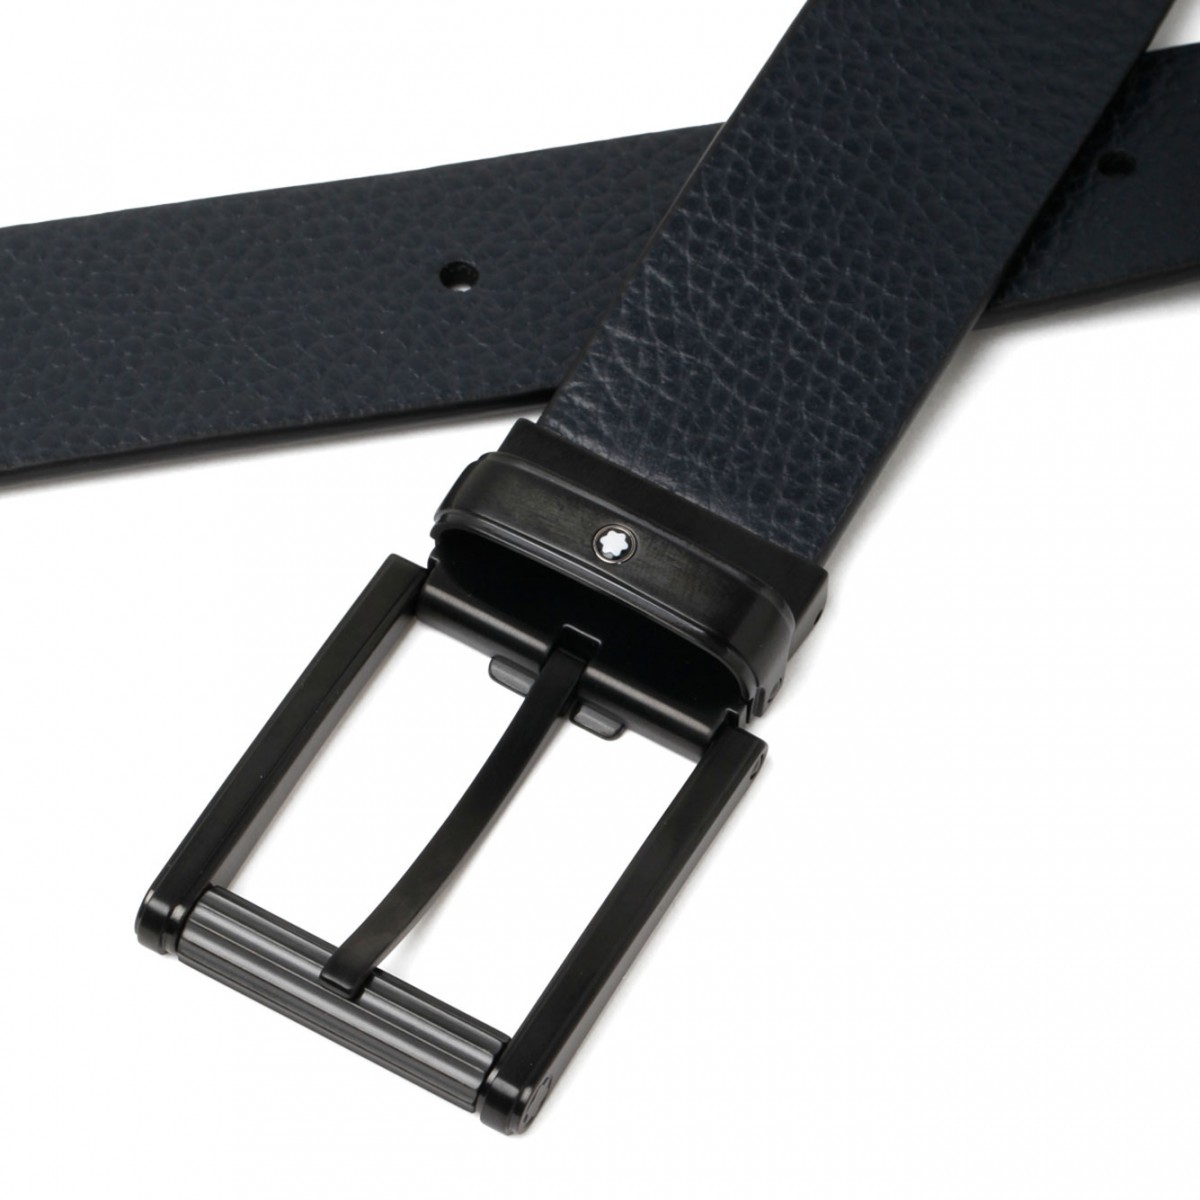 TOM FORD debossed-logo buckle belt - Black